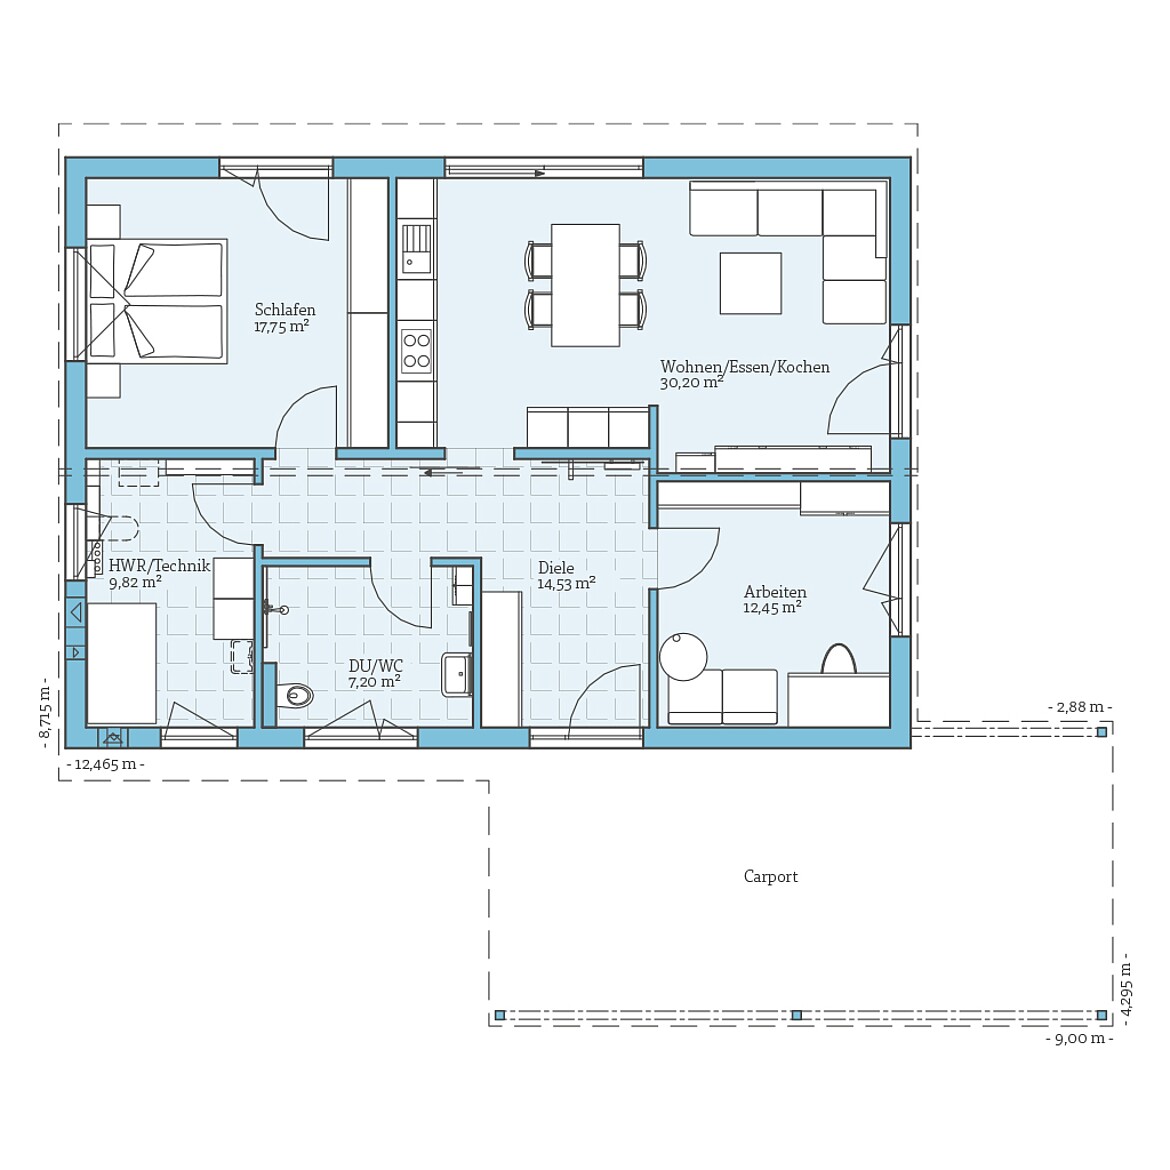 Prefabricated house Bungalow 92: Ground floor plan